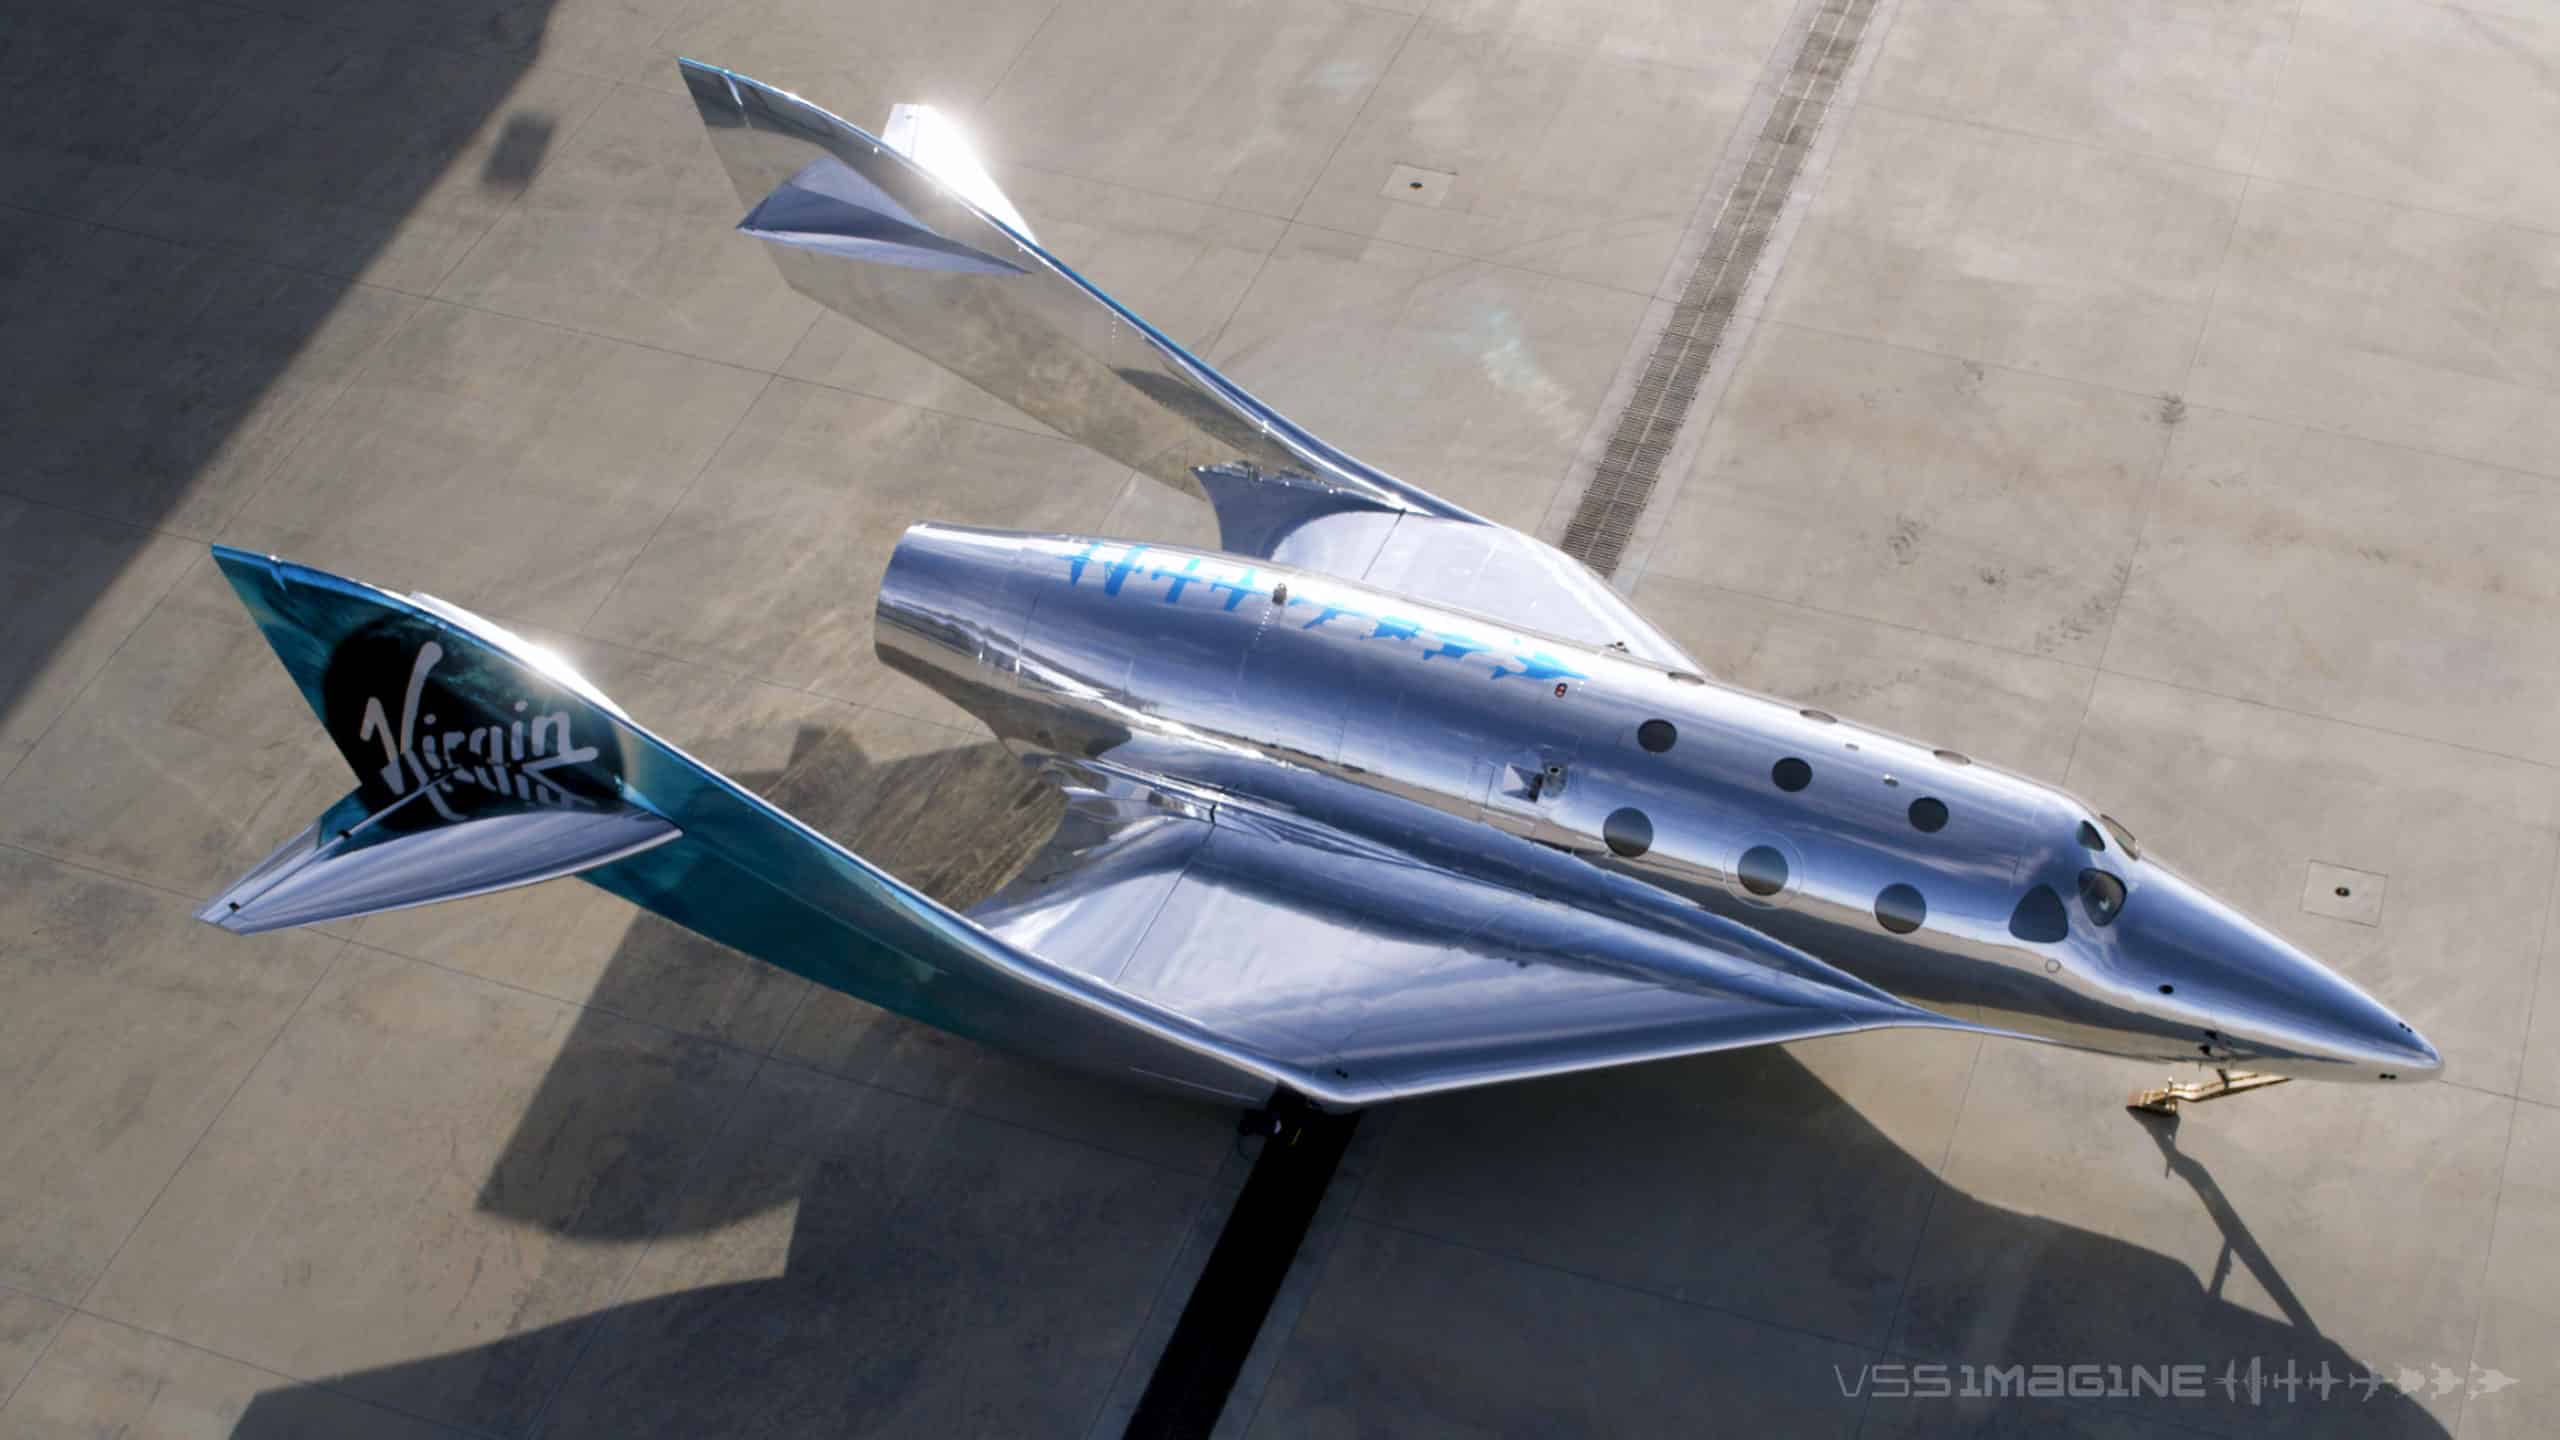 Virgin Galactic Spaceship 3, VSS IMagine